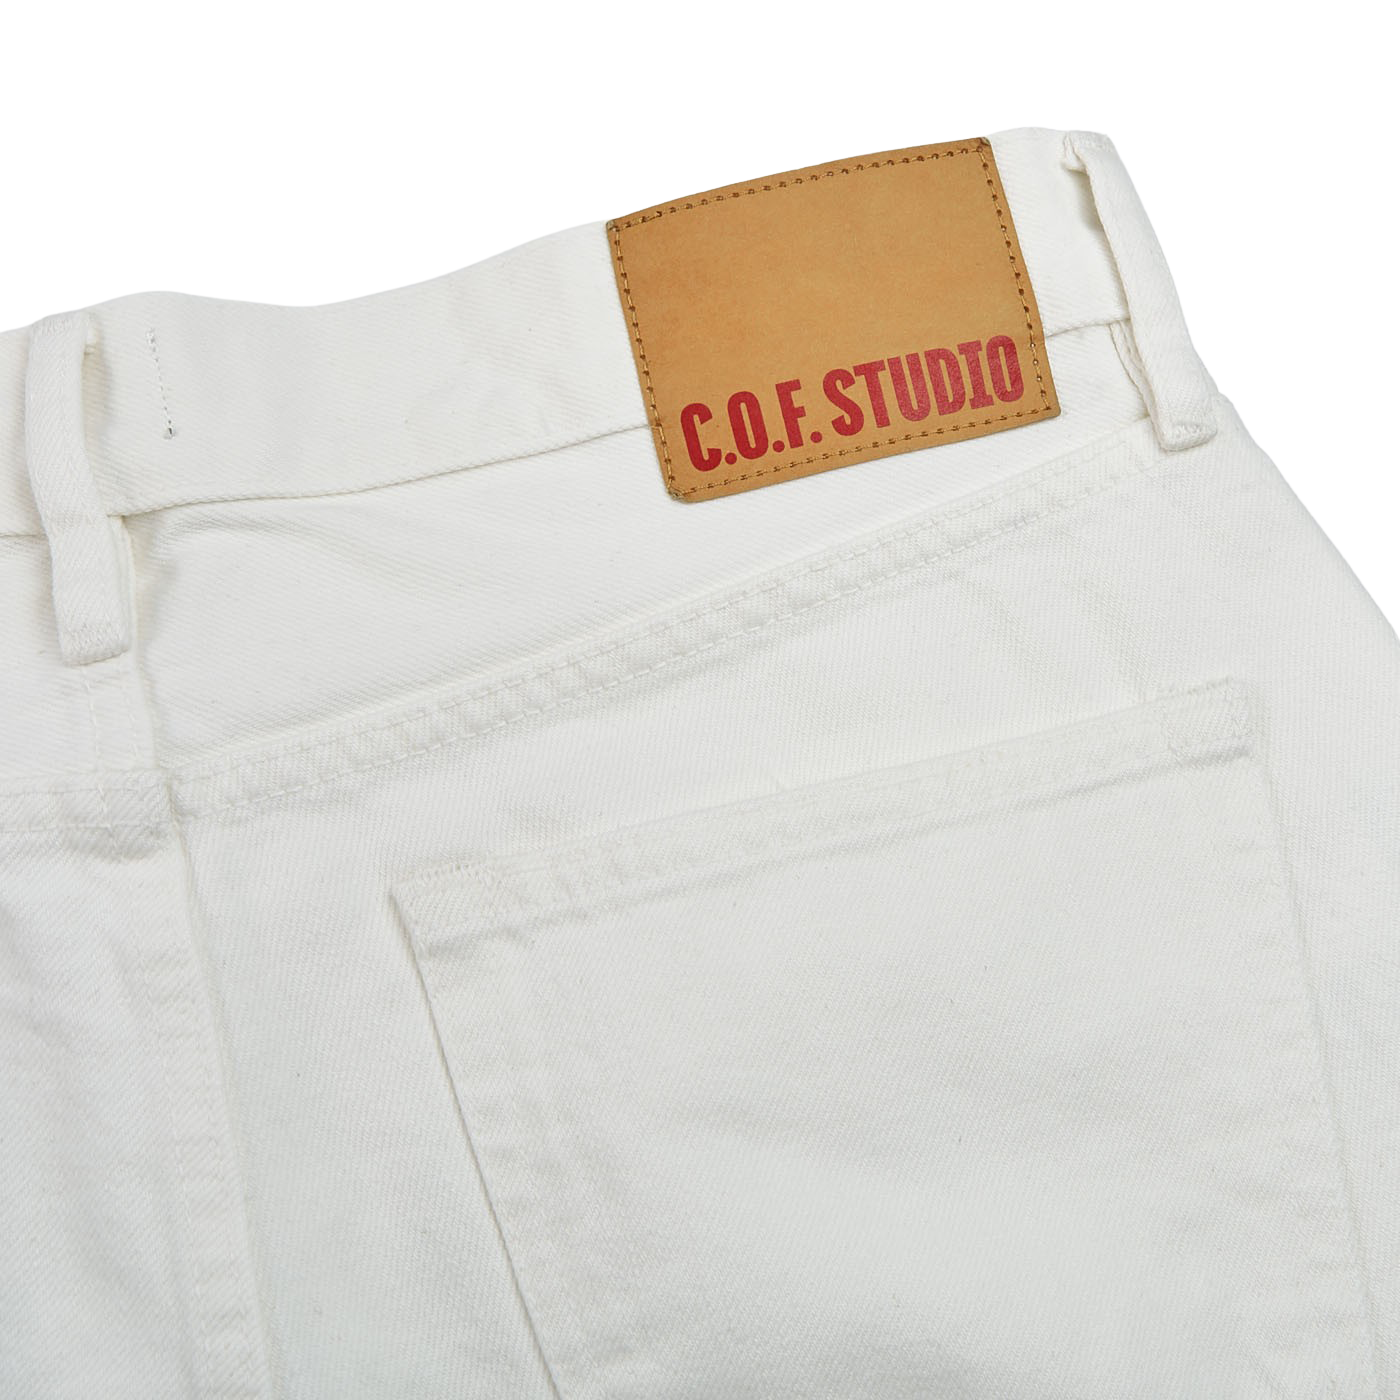 A pair of Ecru Stone Washed Kuroki Cotton M7 jeans with a label that says C.O.F Studio made from Kuroki organic denim.